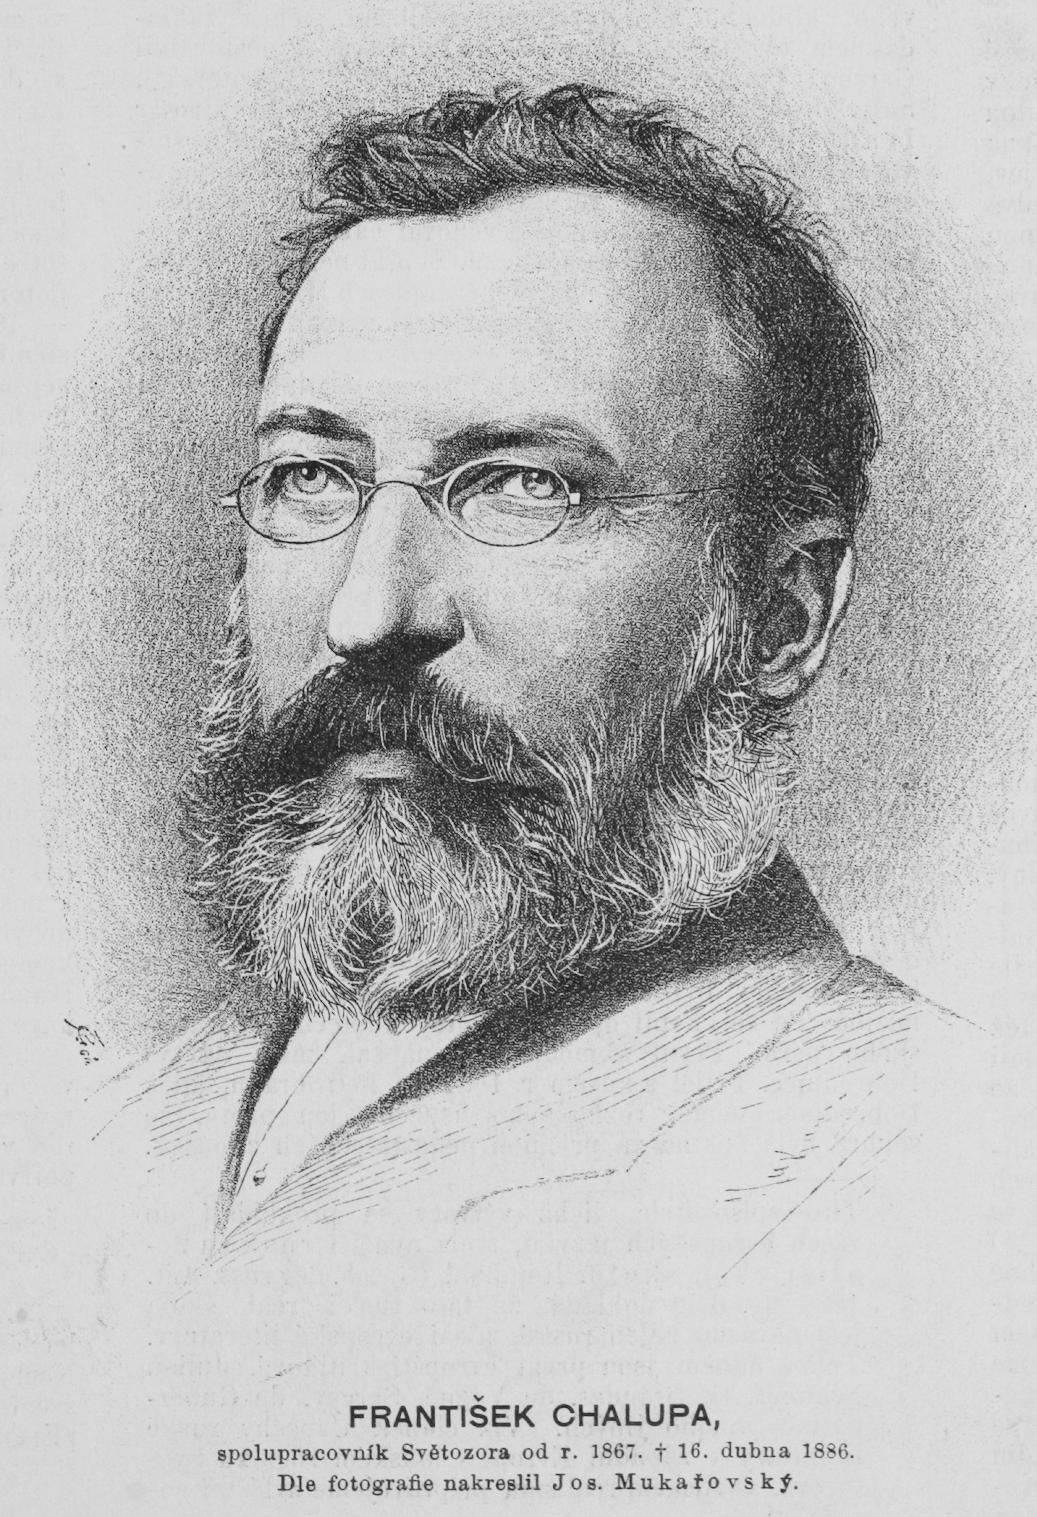 Image of František Chalupa from Wikidata